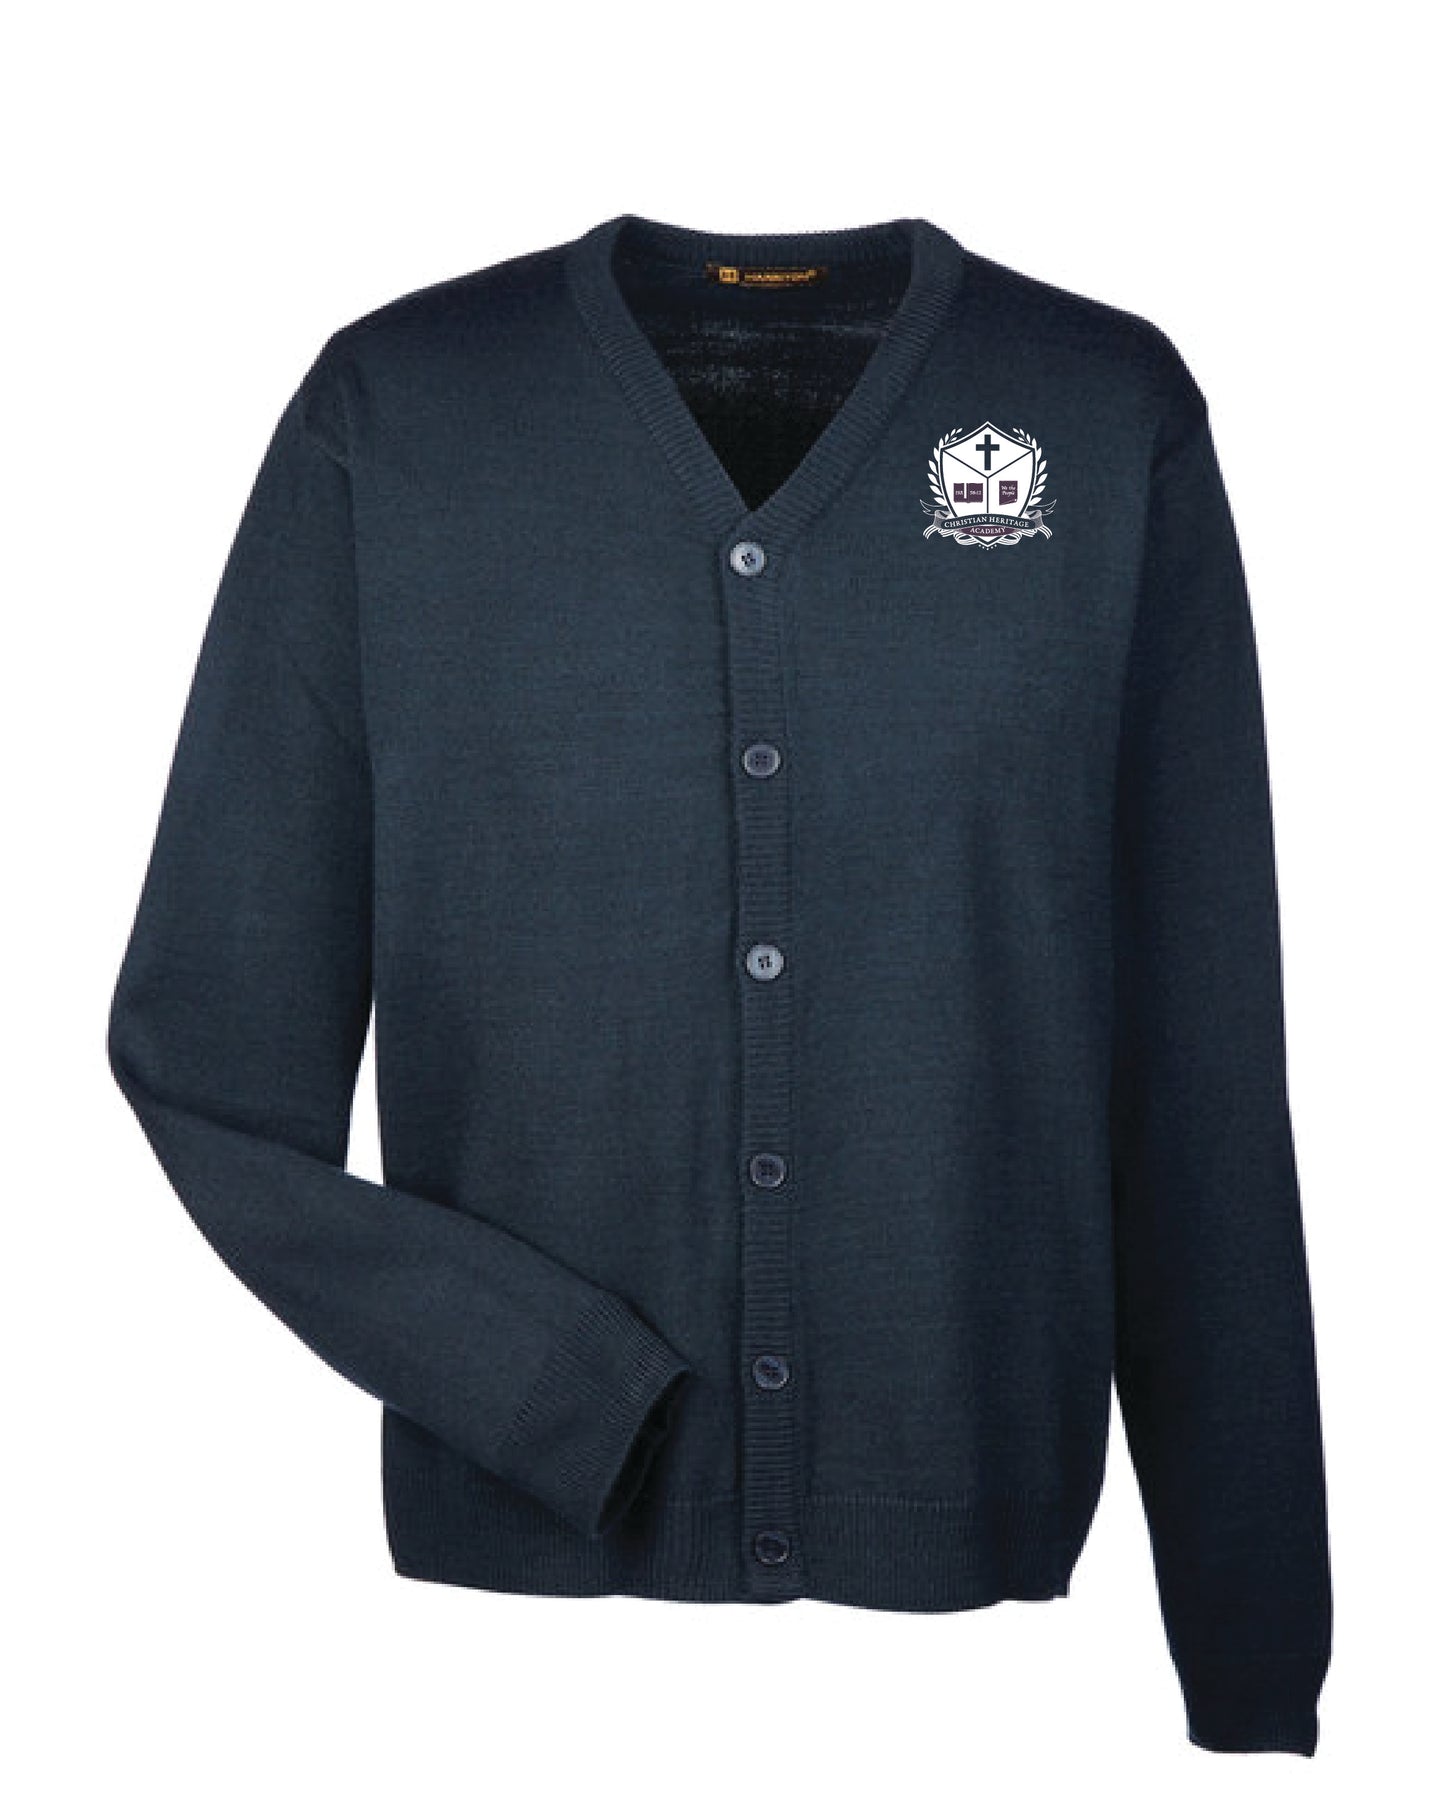 Button-Up Sweater Cardigan (Men's)